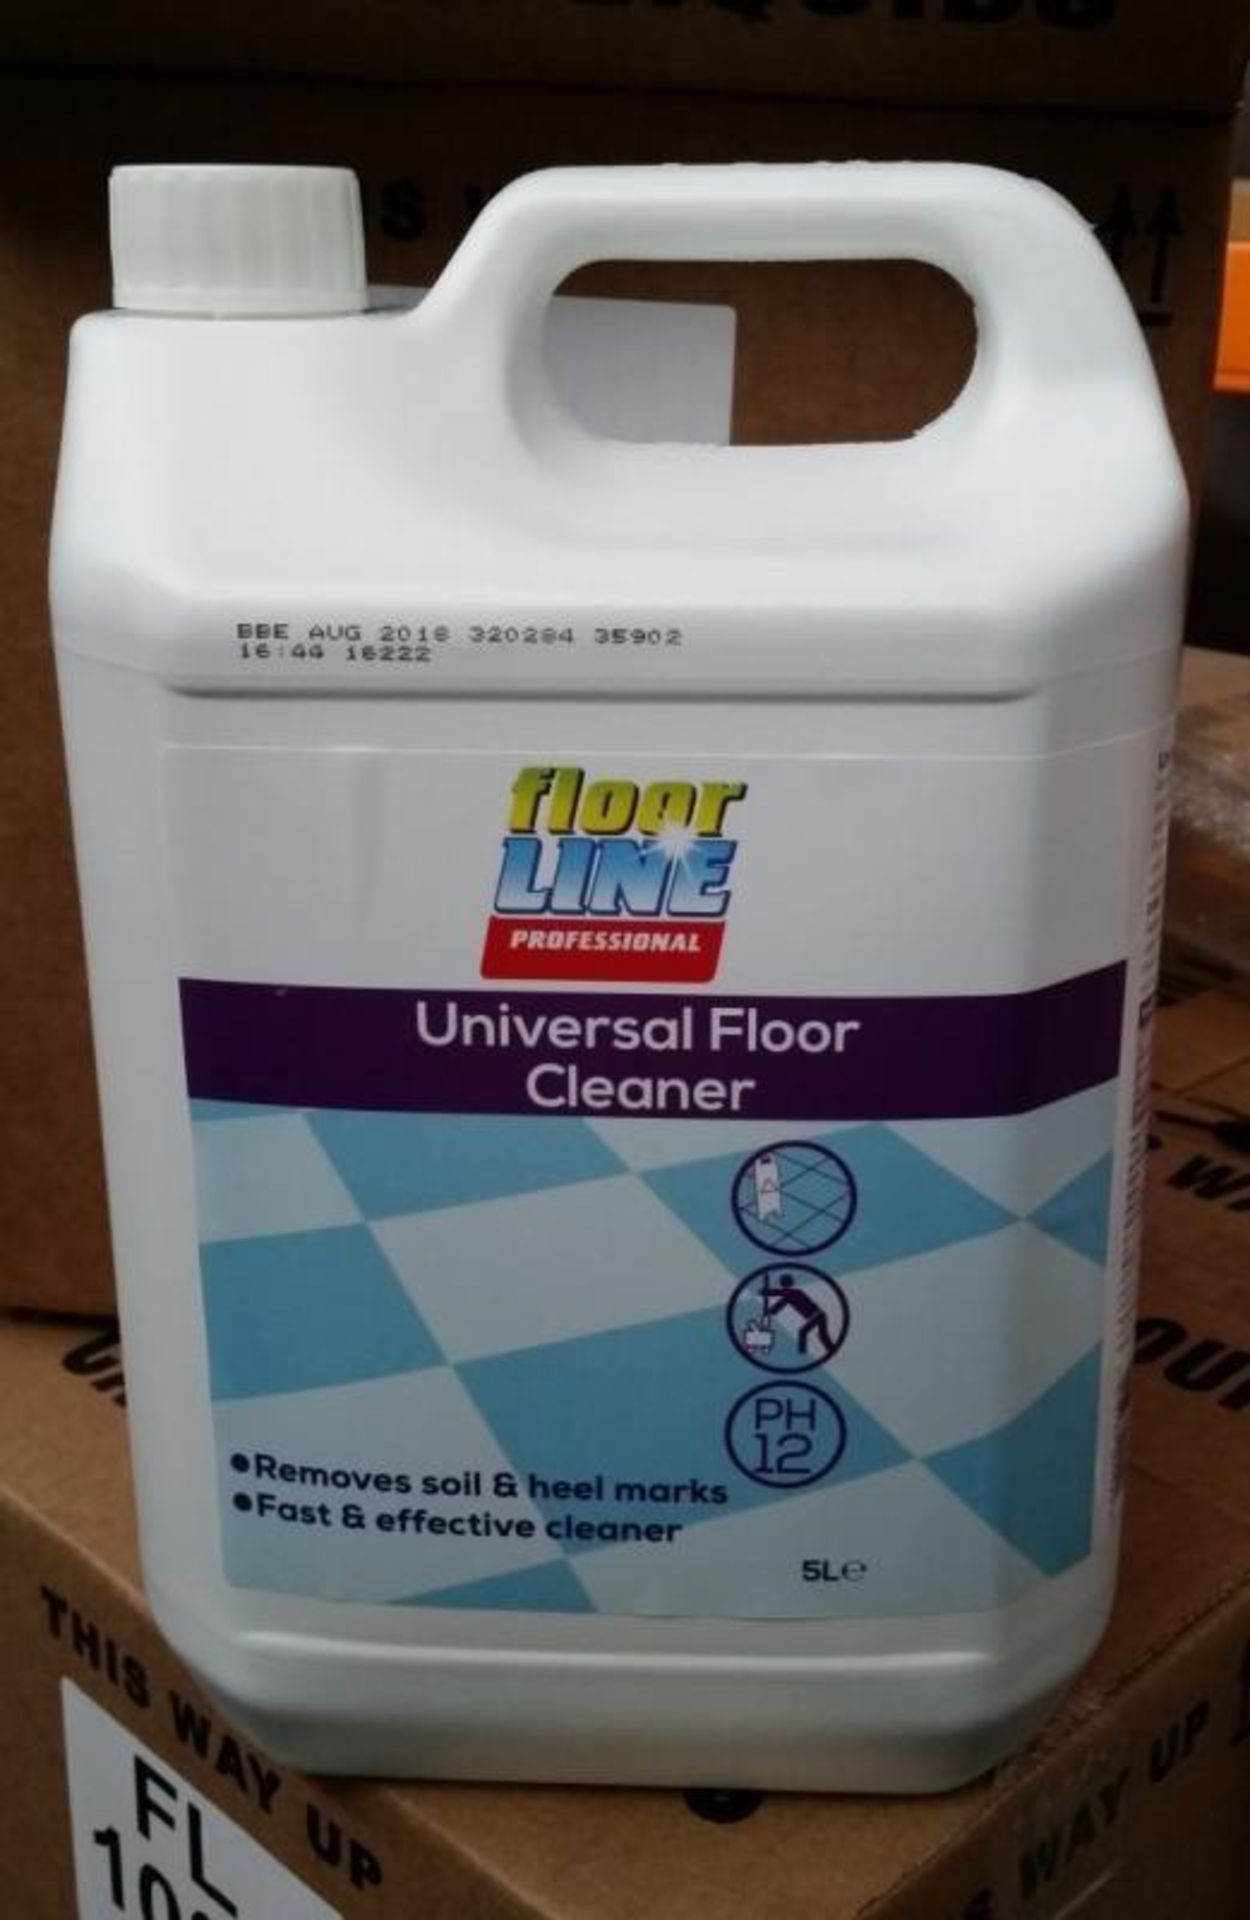 12 x Floor Line Professional 5 Litre Universal Floor Cleaner - Removes Soil & Heel Marks - Fast & - Image 7 of 7